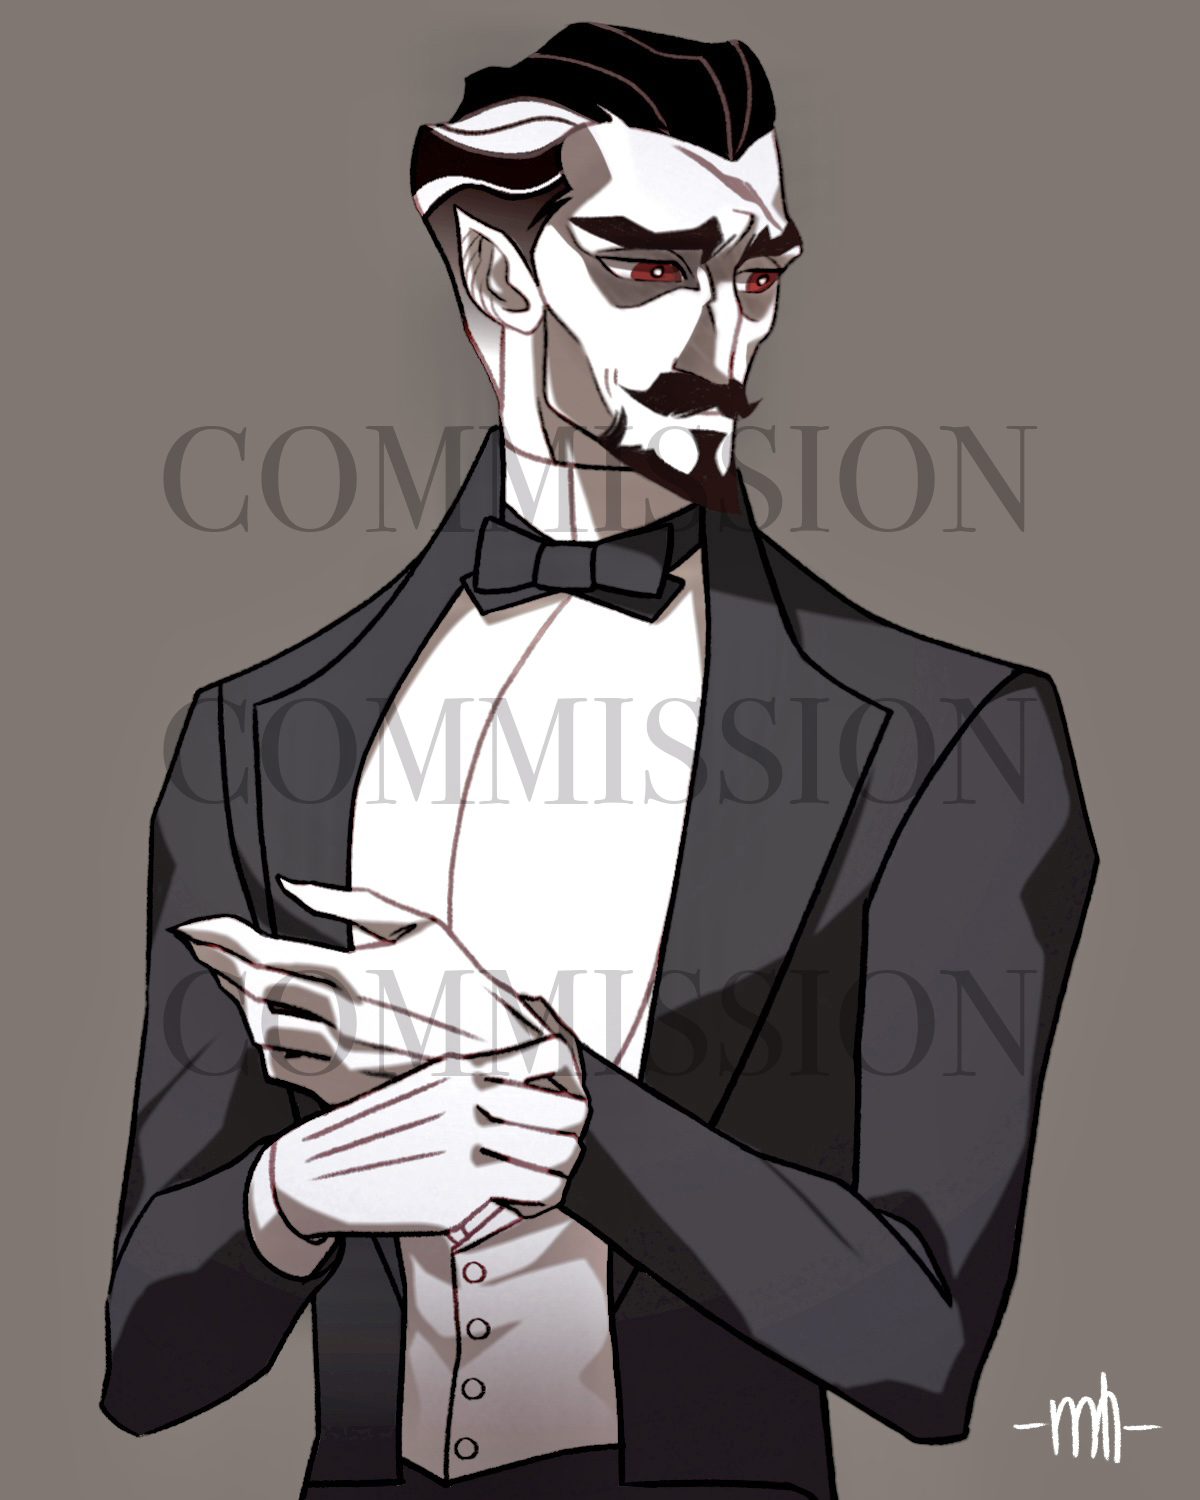 Commission, Dracula illustration